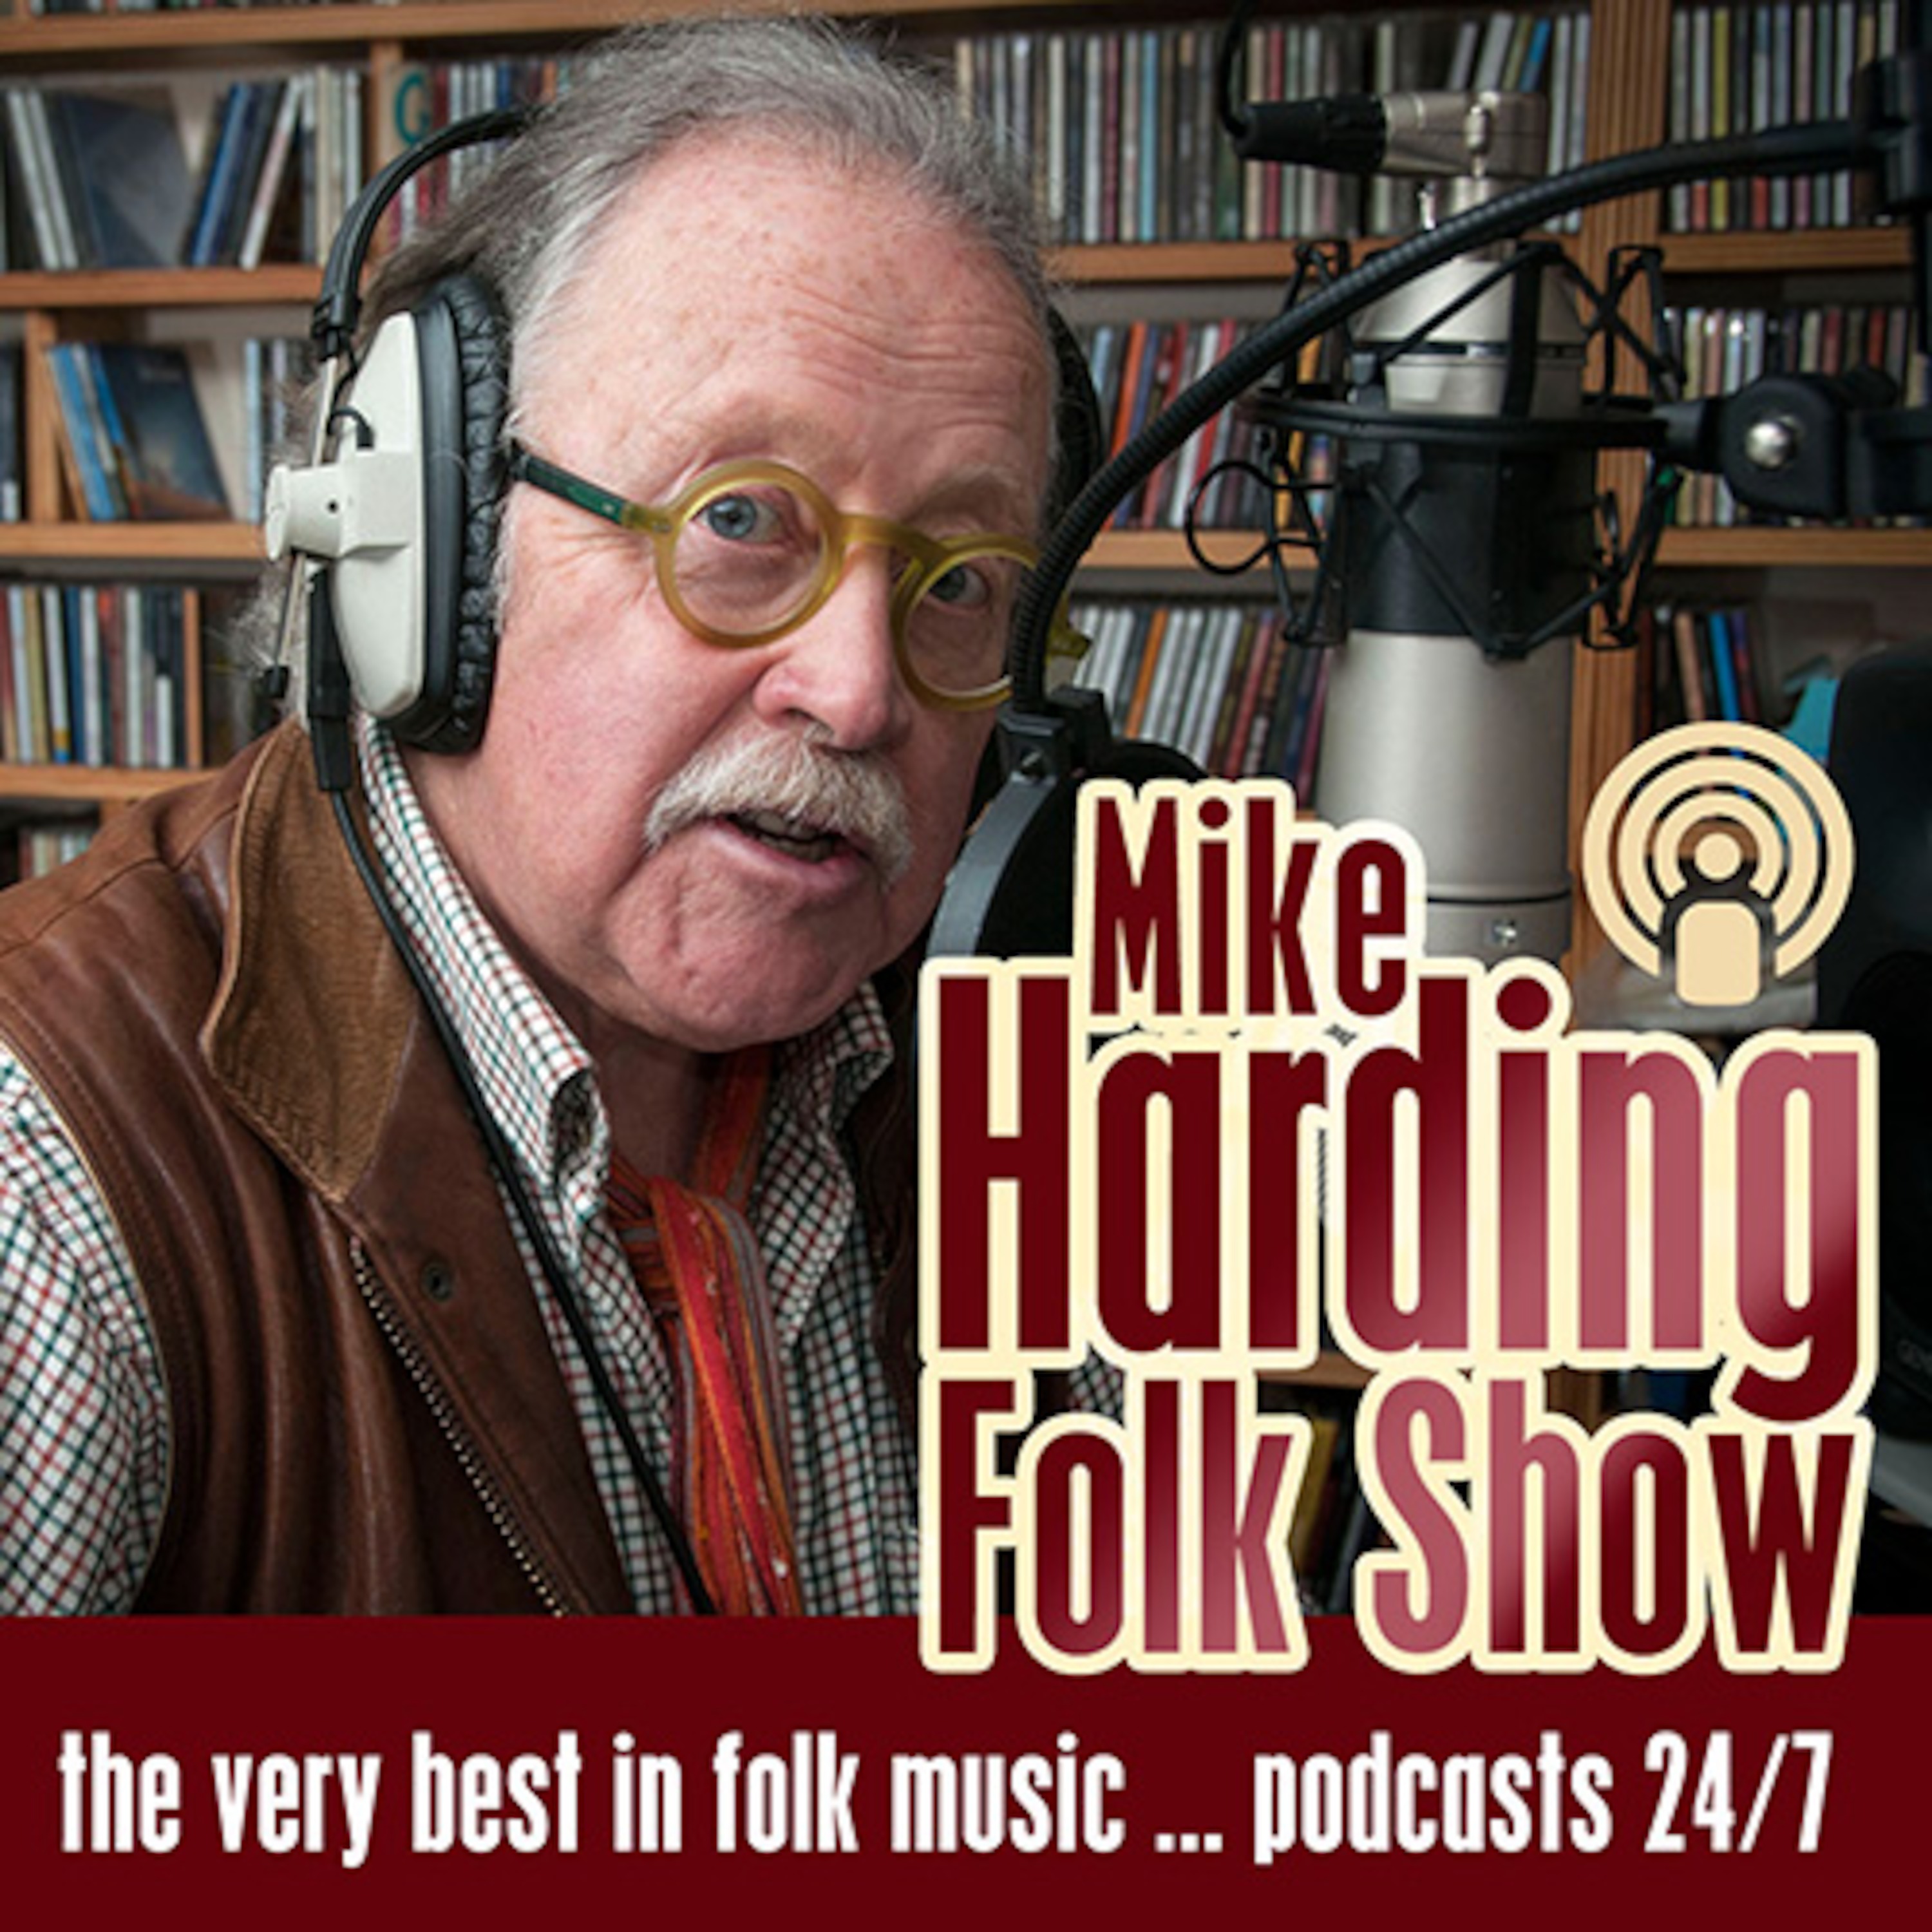 Mike Harding Folk Show 08